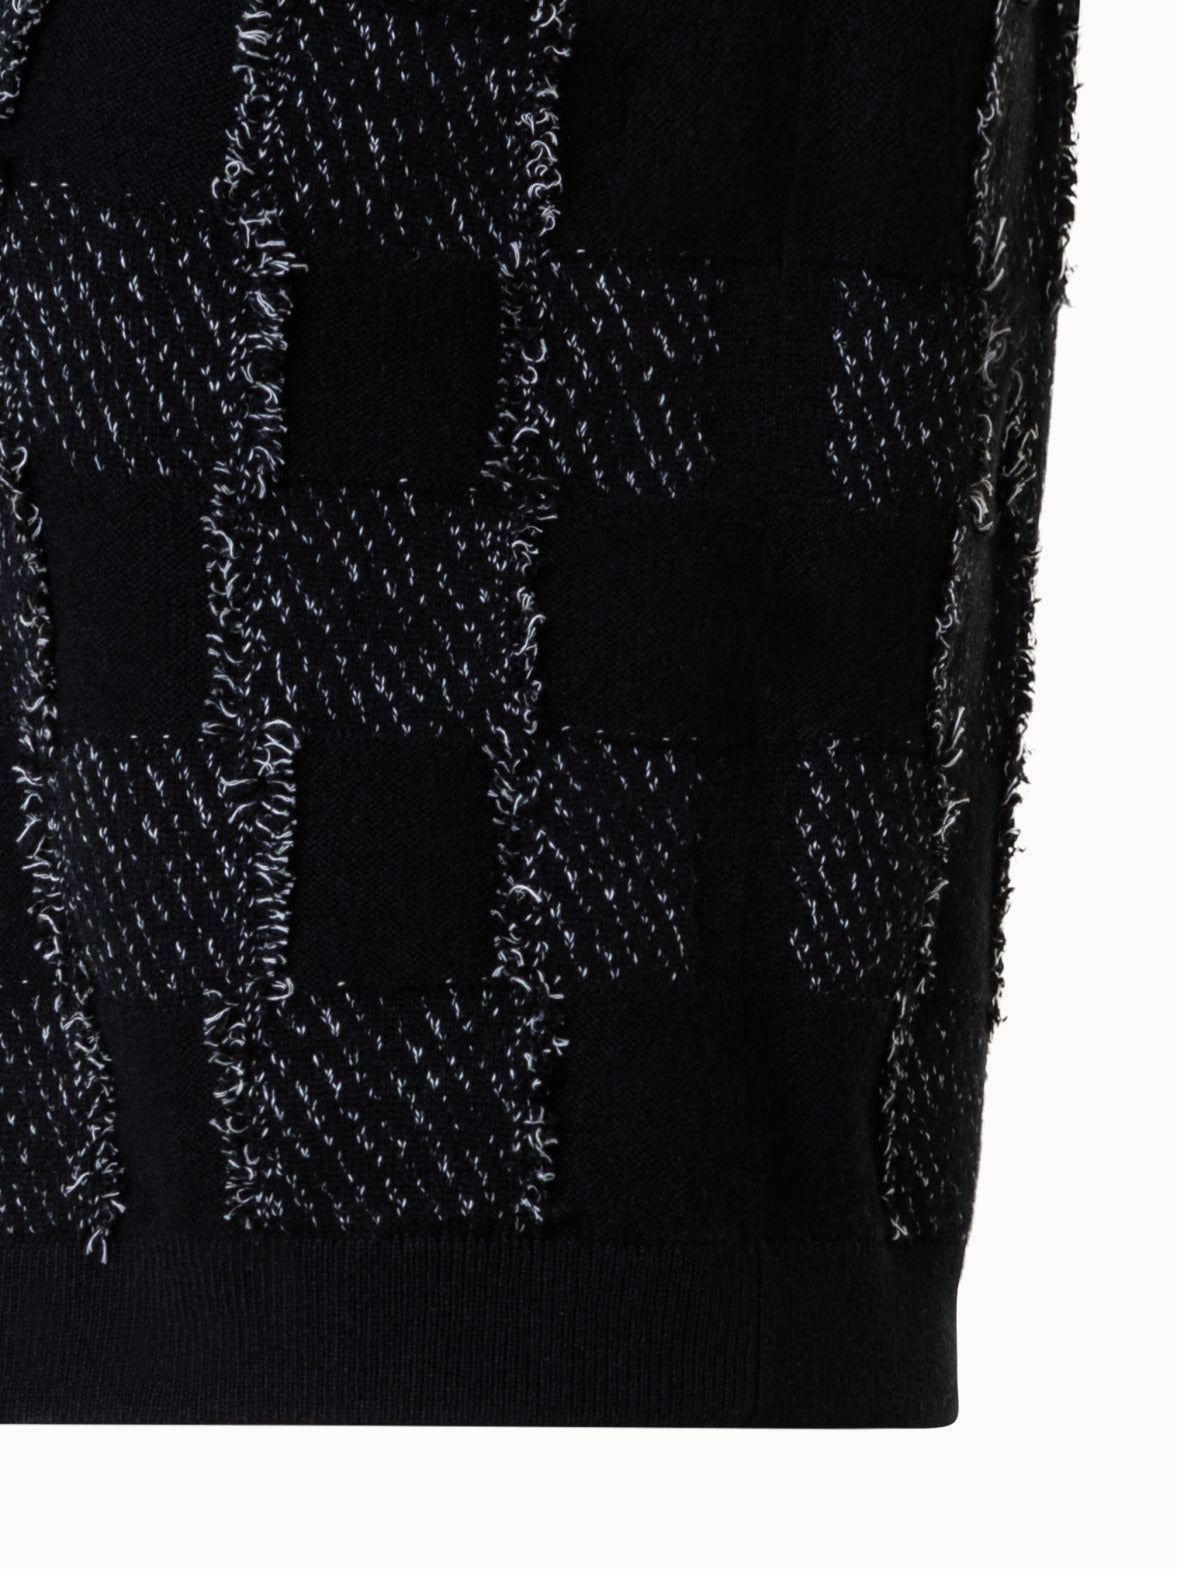 Black Jacquard Knit Pullover